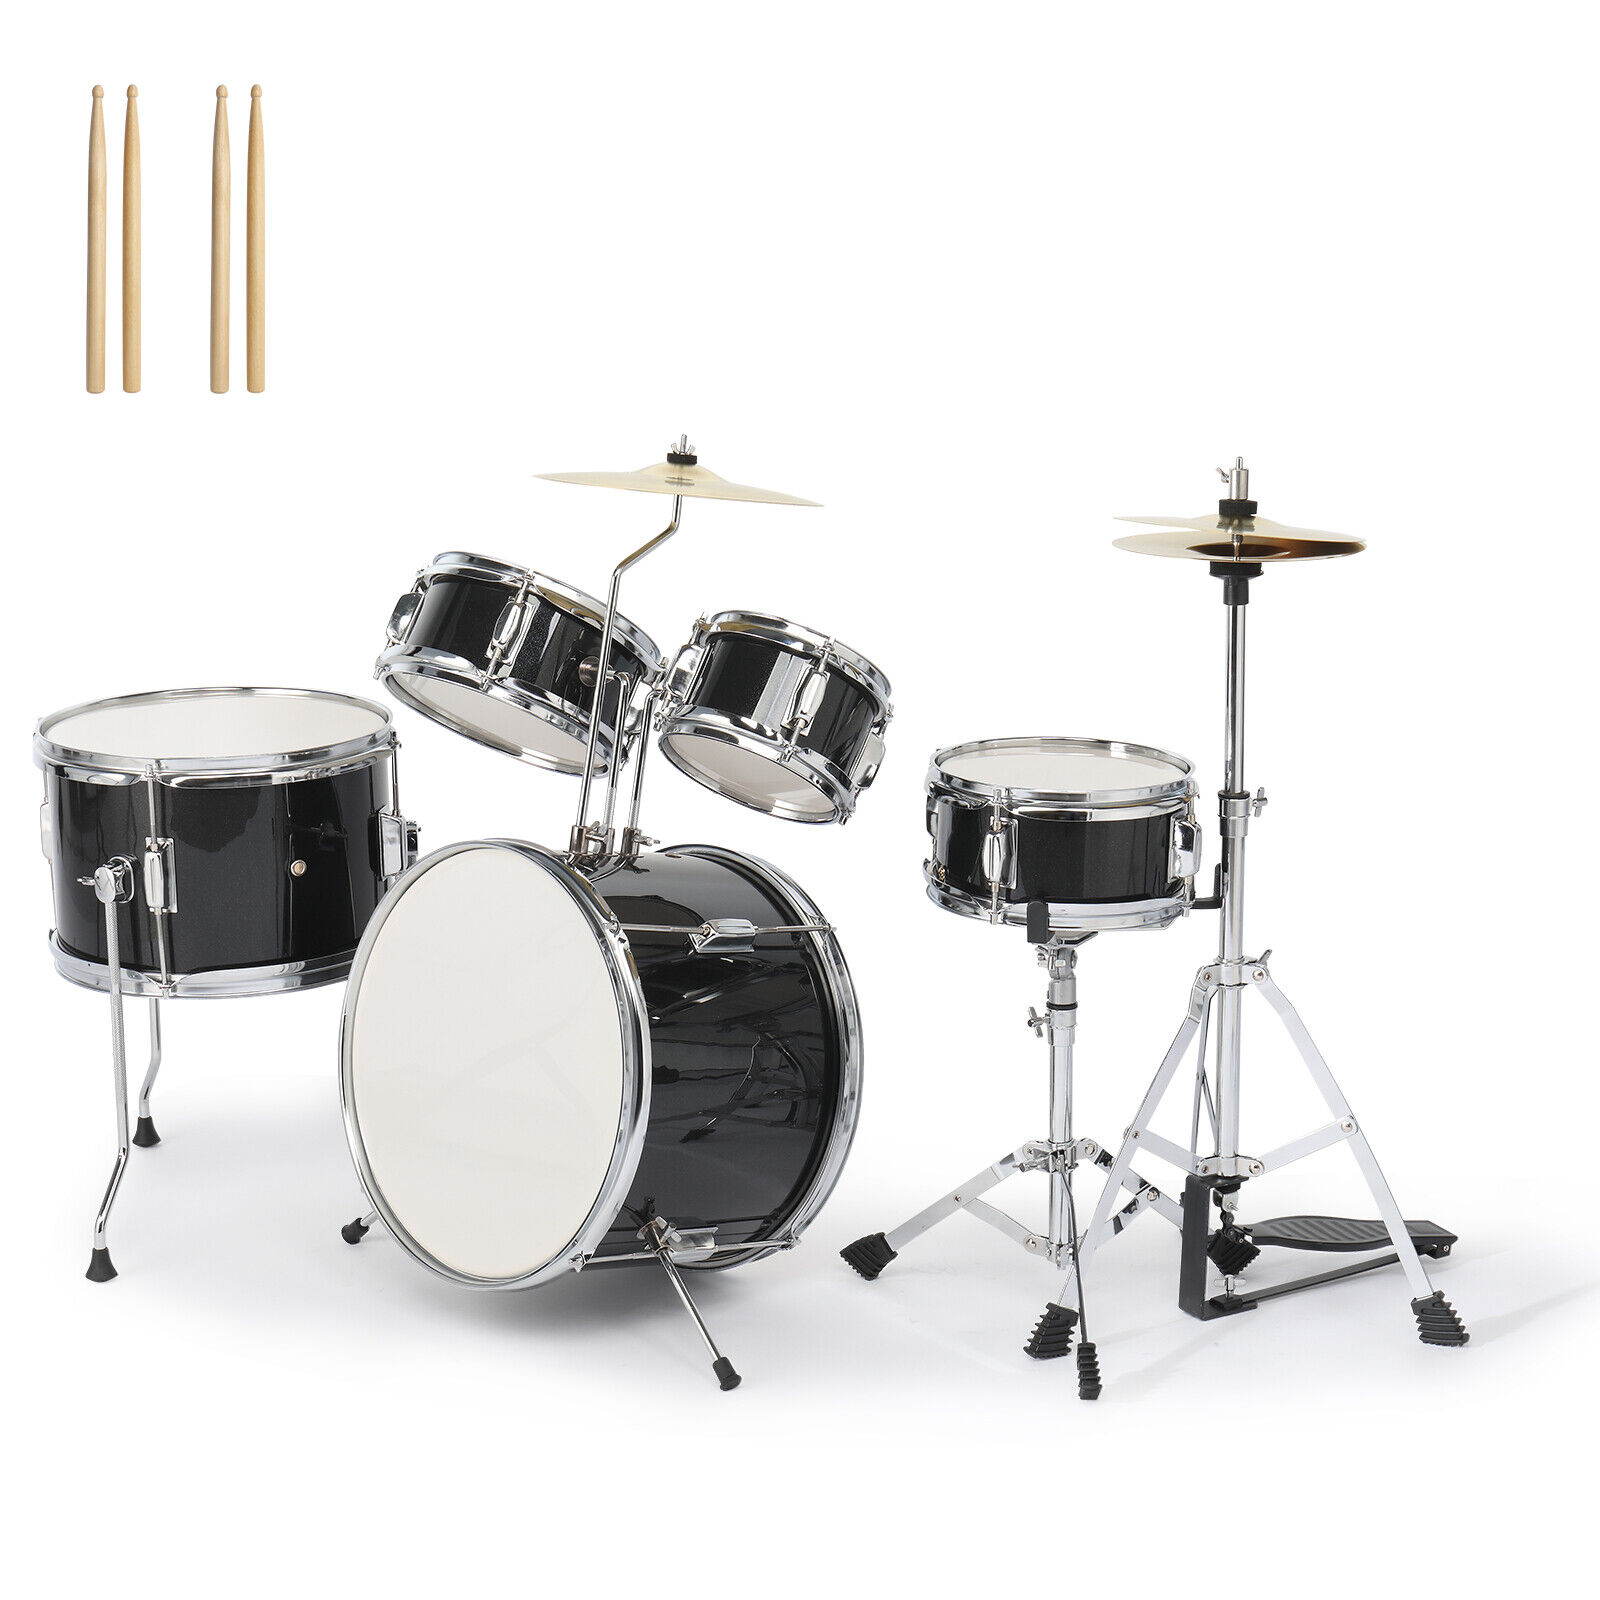 3-5-Piece Complete Junior Drum Set with Genuine Brass Cymbals for Beginner Kids 1